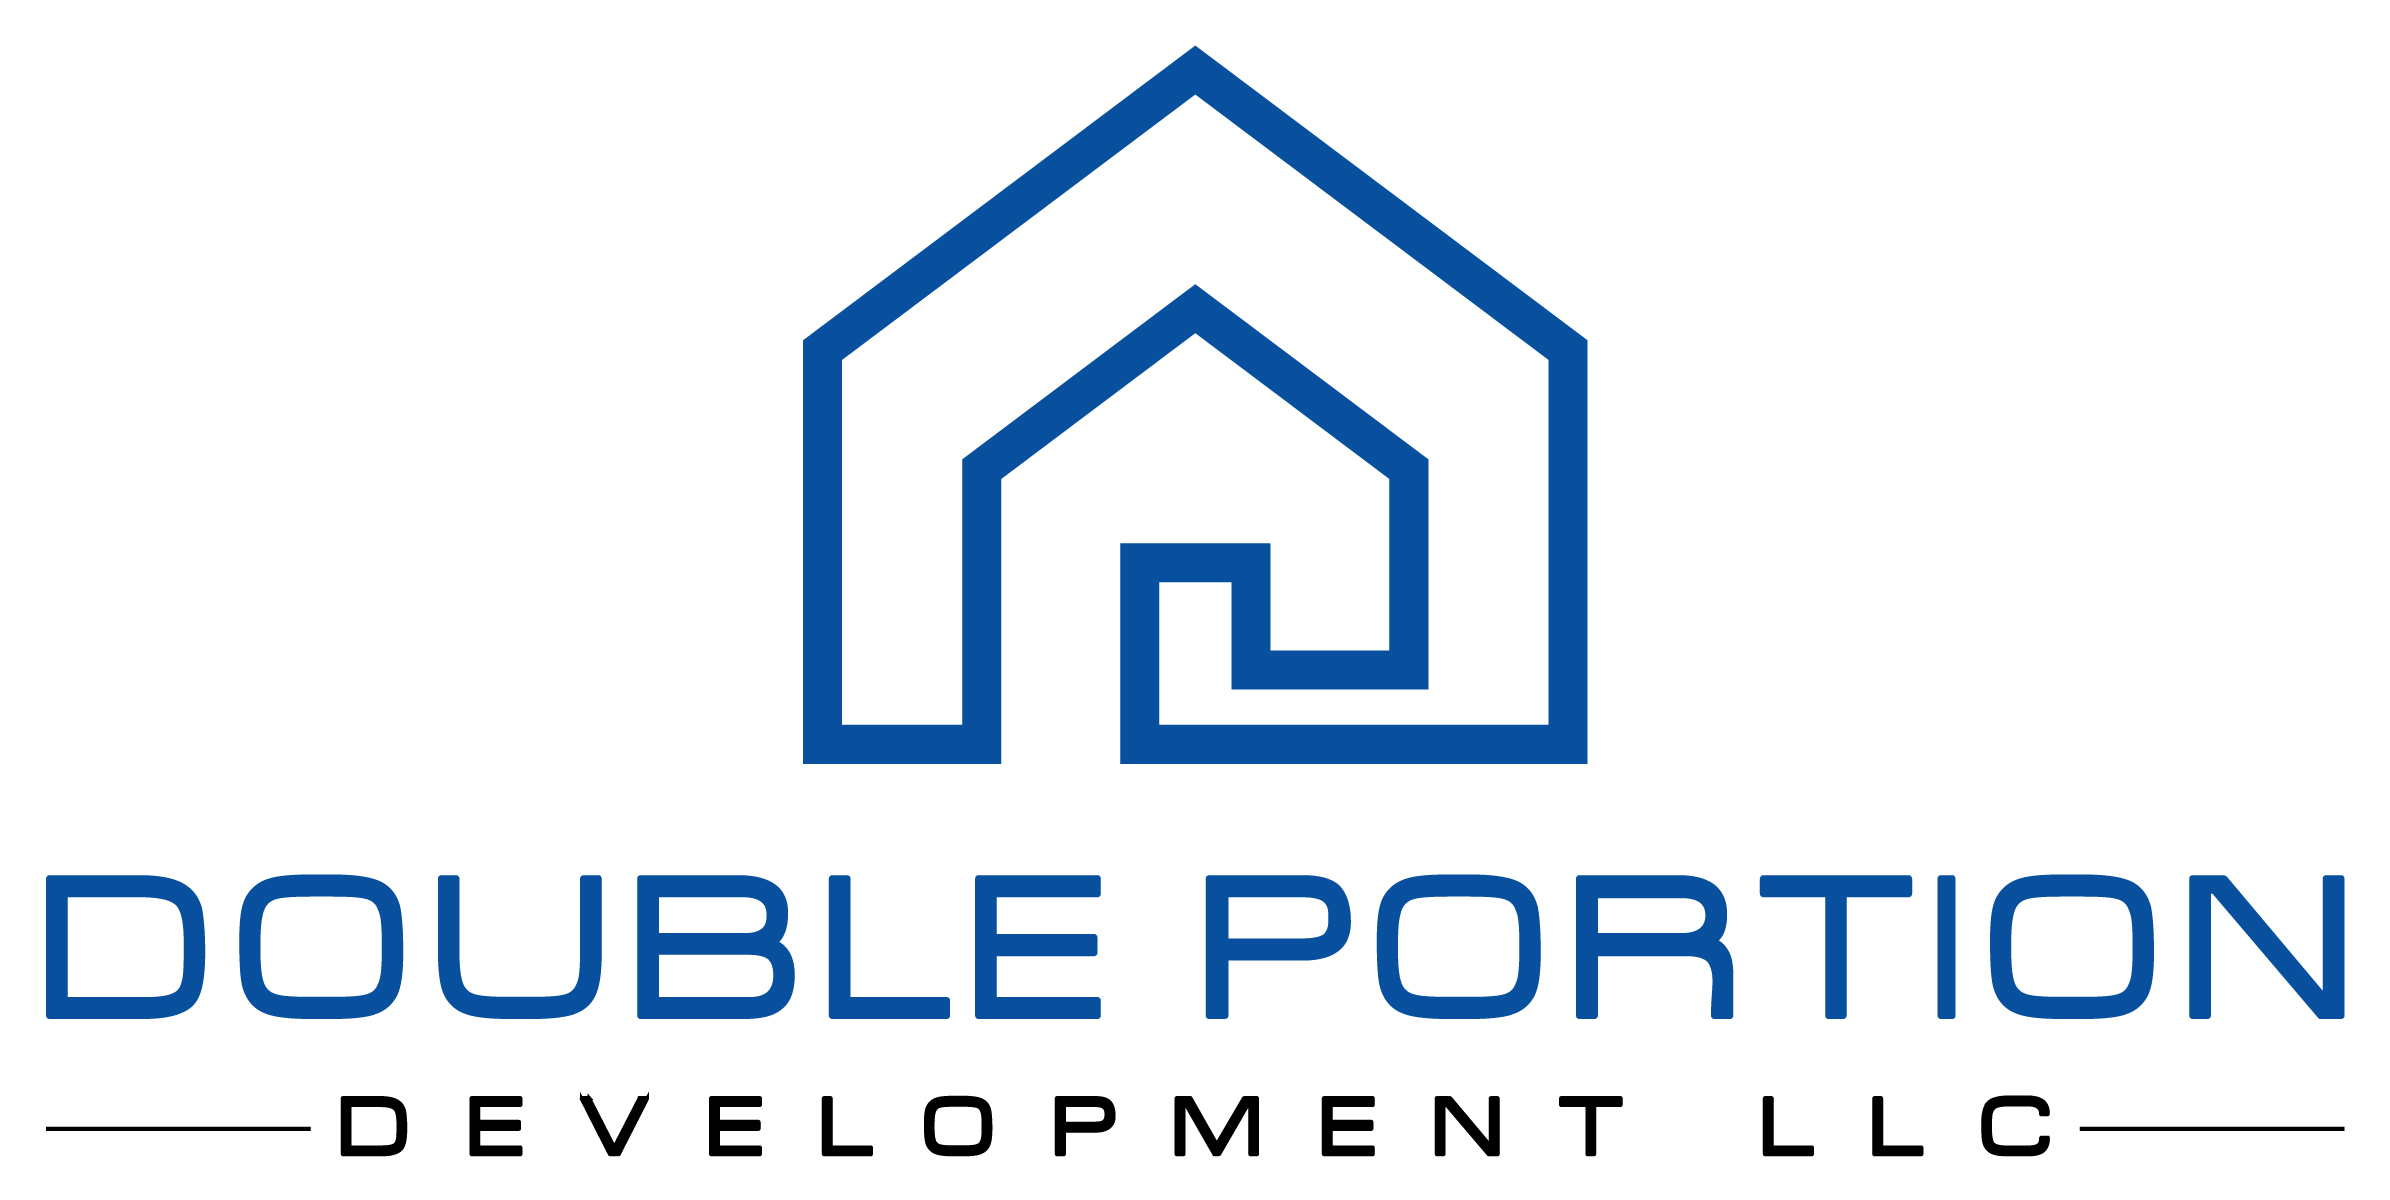 Double Portion Development Logo